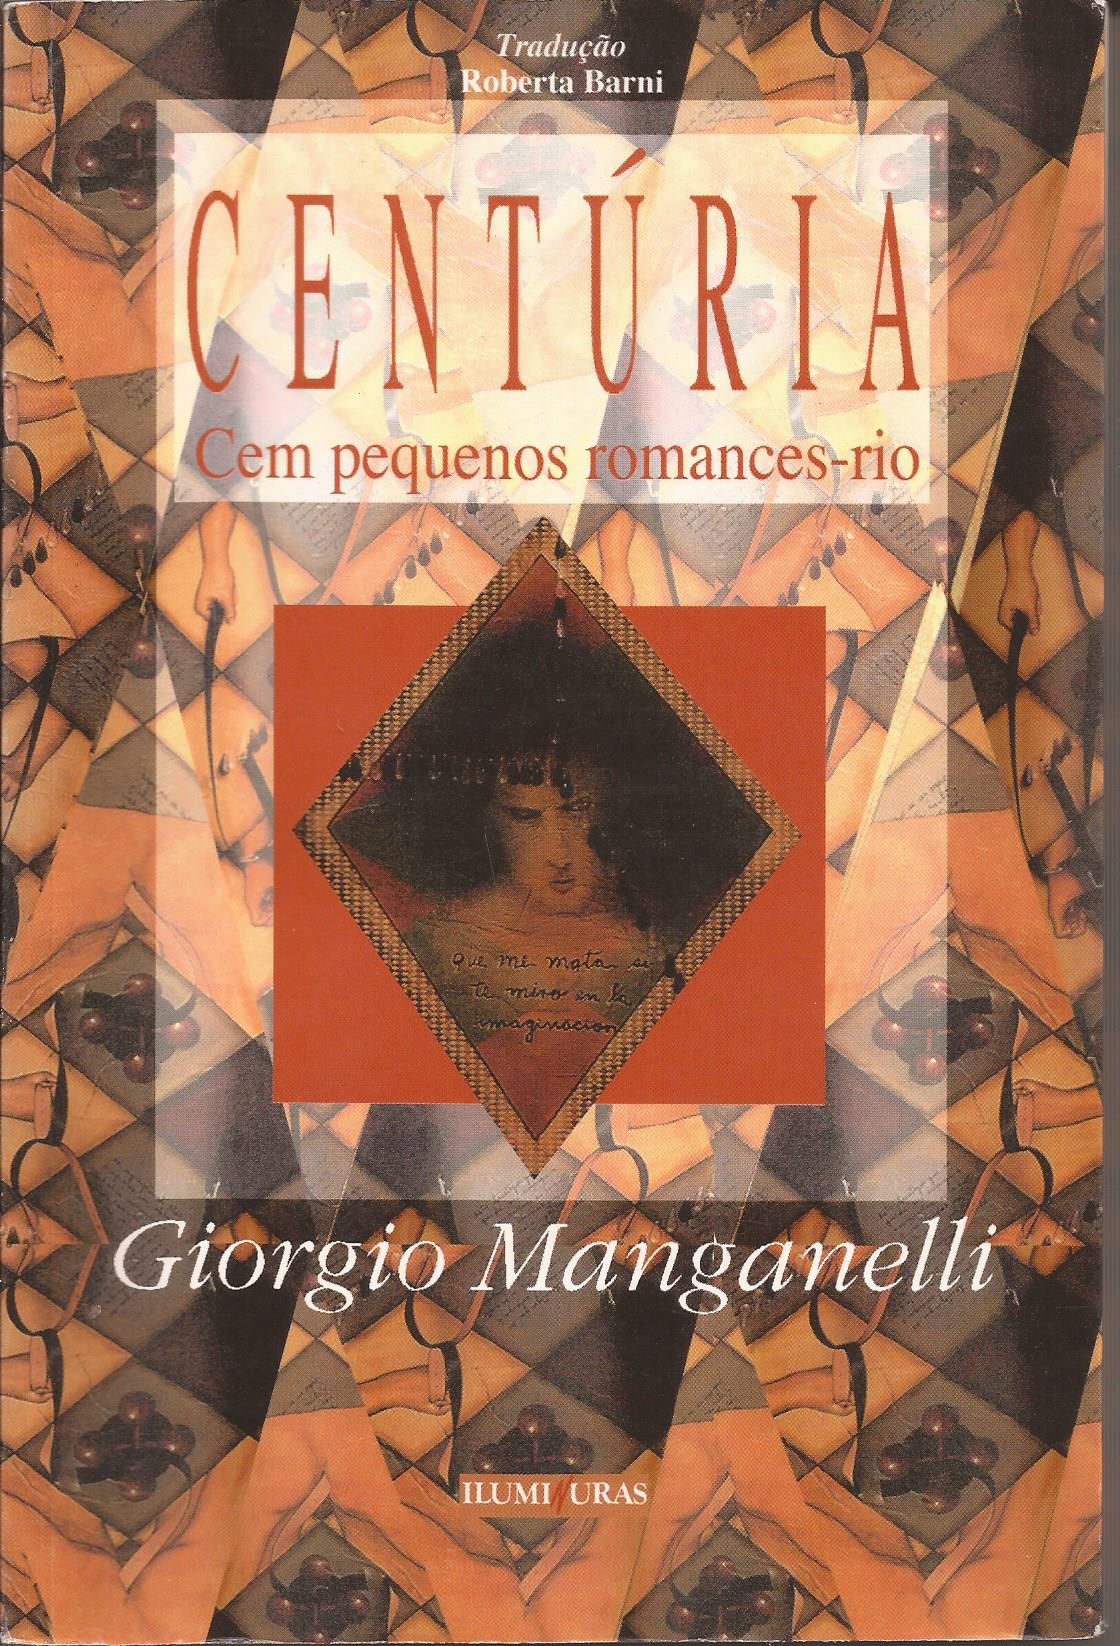 https://www.literaturabrasileira.ufsc.br/_images/obras/centuria_1995_ok.jpg